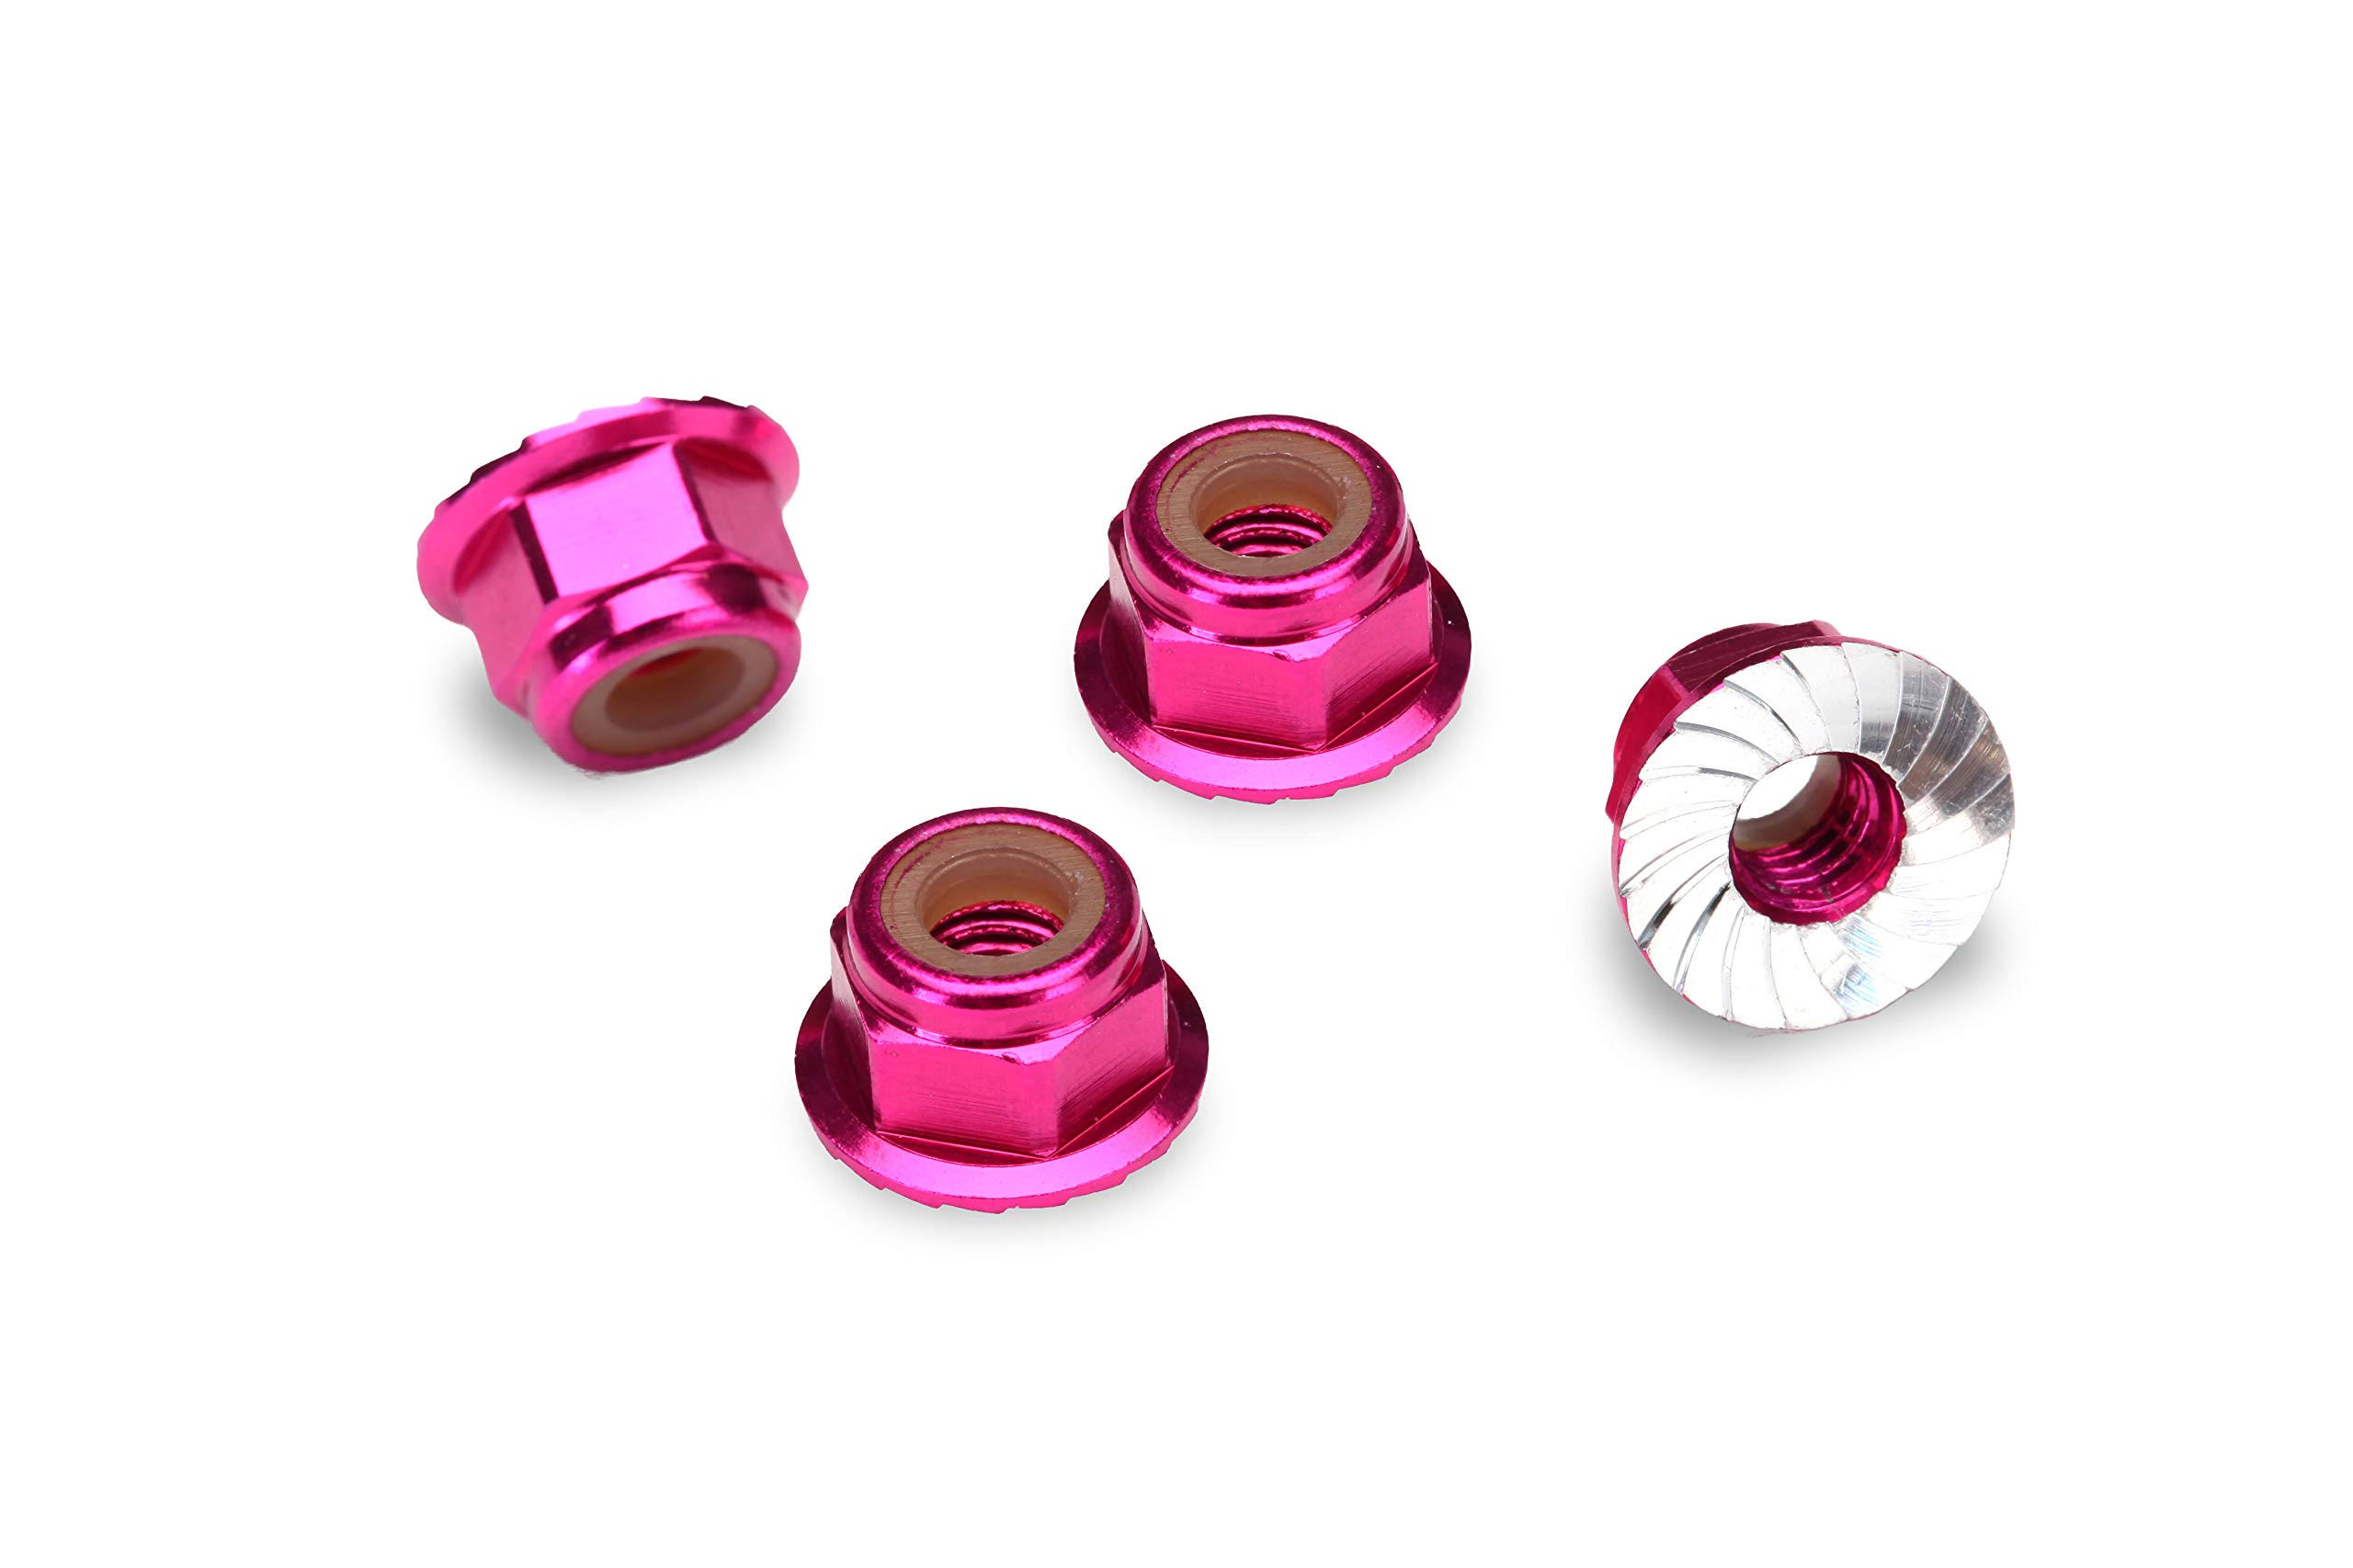 Traxxas Aluminum Flanged Nylon Locking Nuts - Pink, 4mm, 4pc